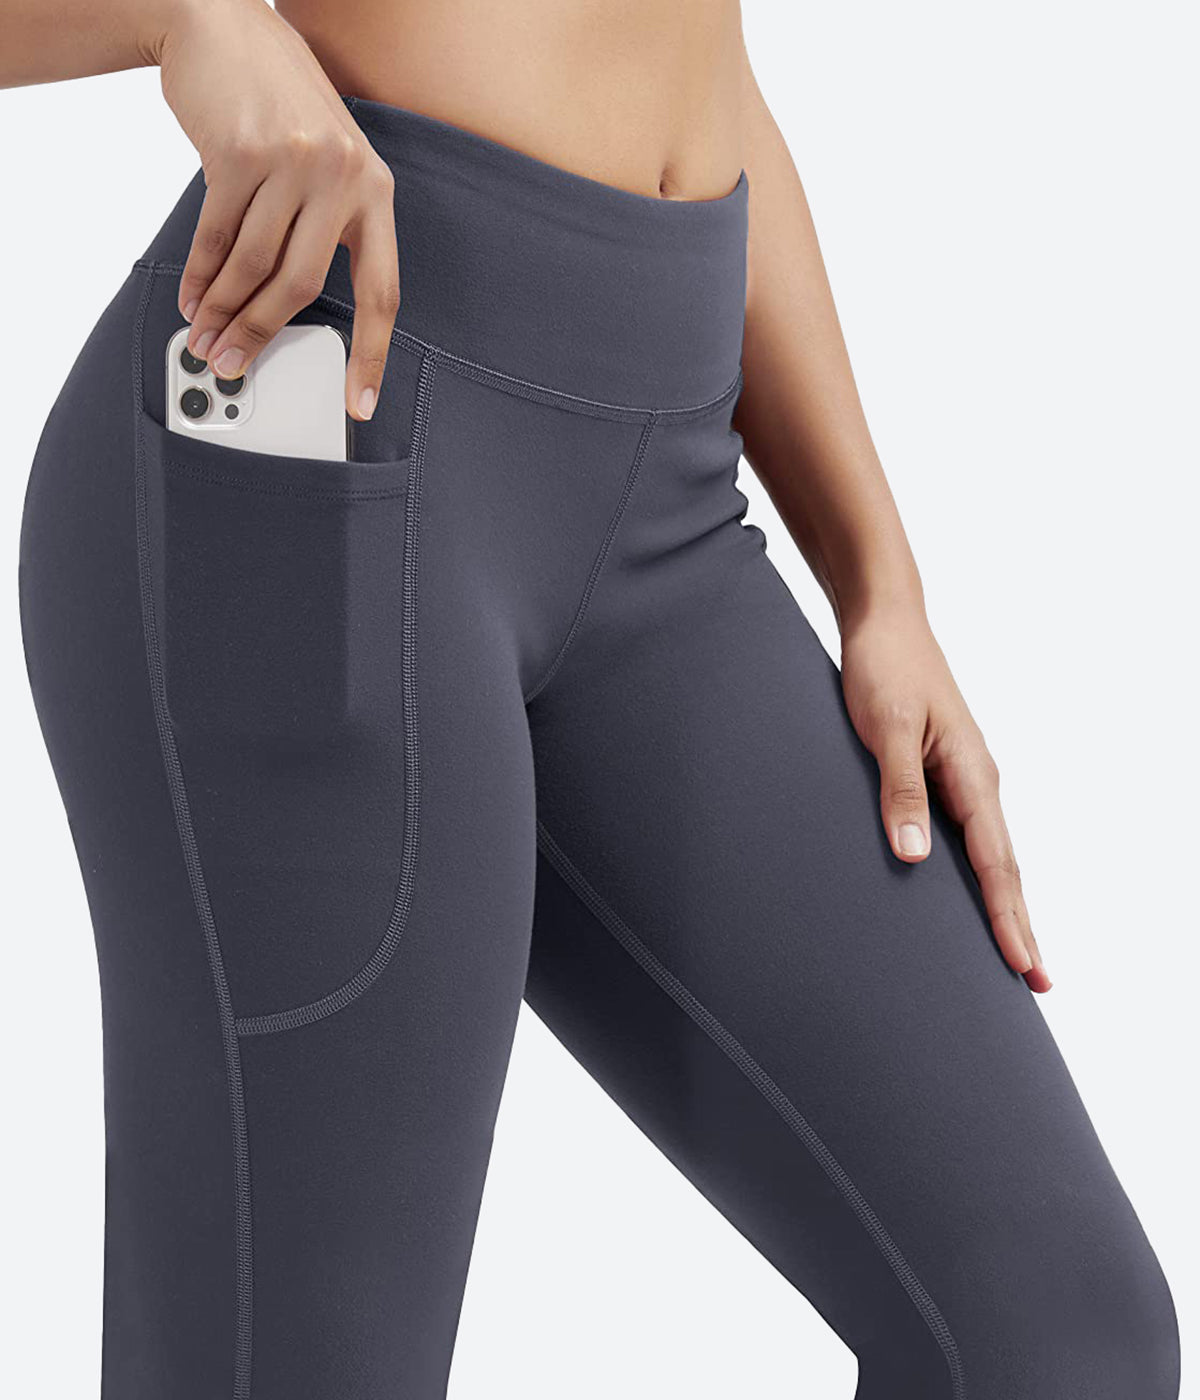 Buy Heathyoga Yoga Pants for Women with Pockets Capri Leggings for